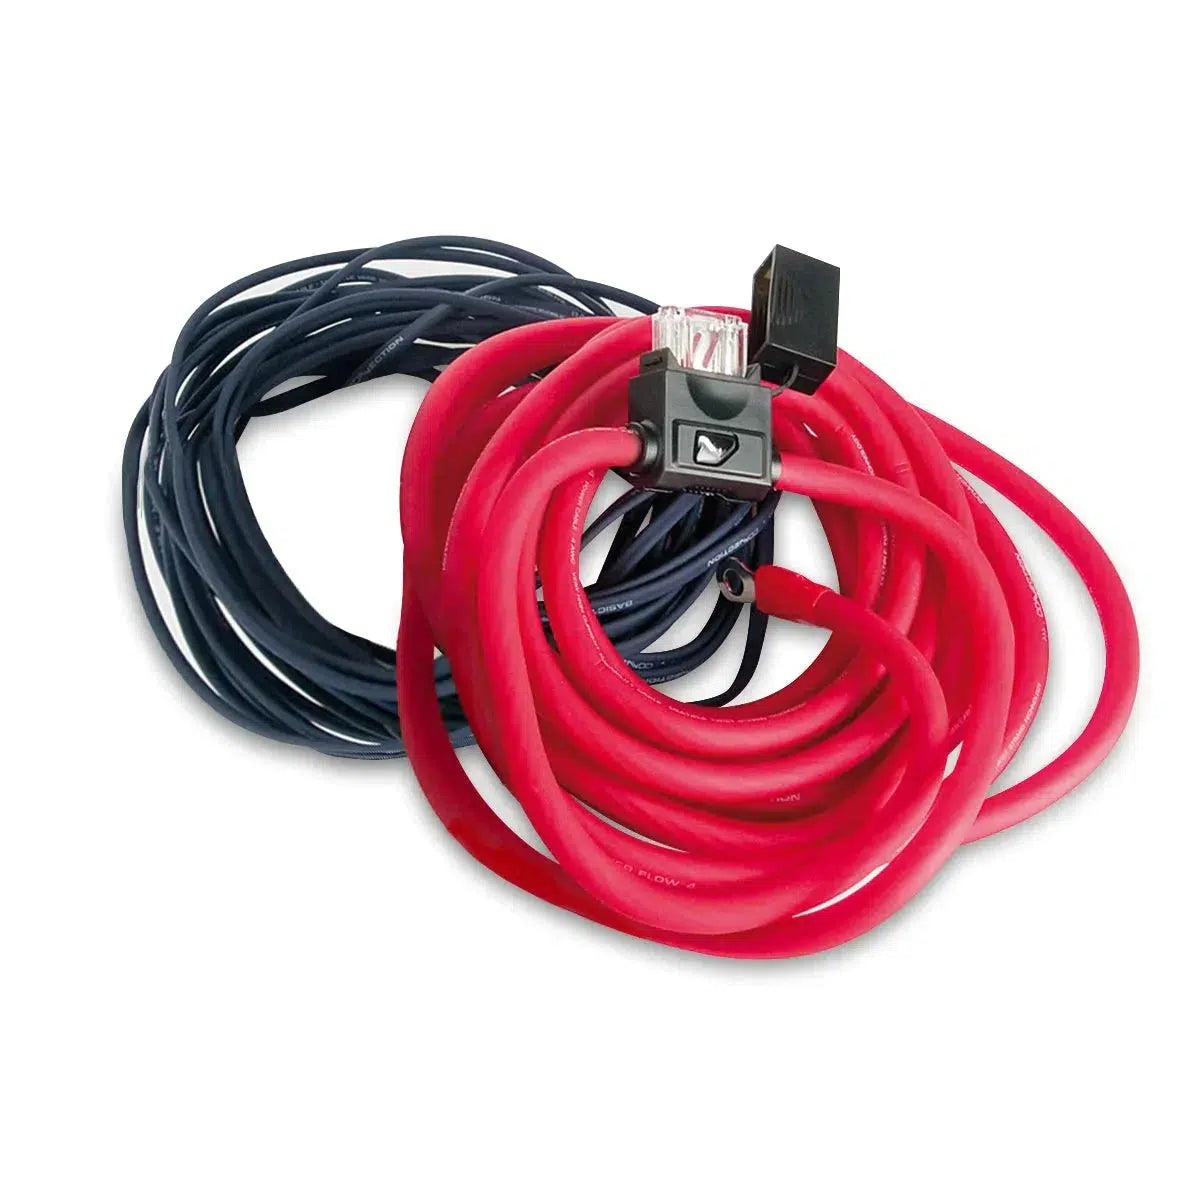 Audison Connection-First FPK 350.1-10mm² power cable-Masori.de